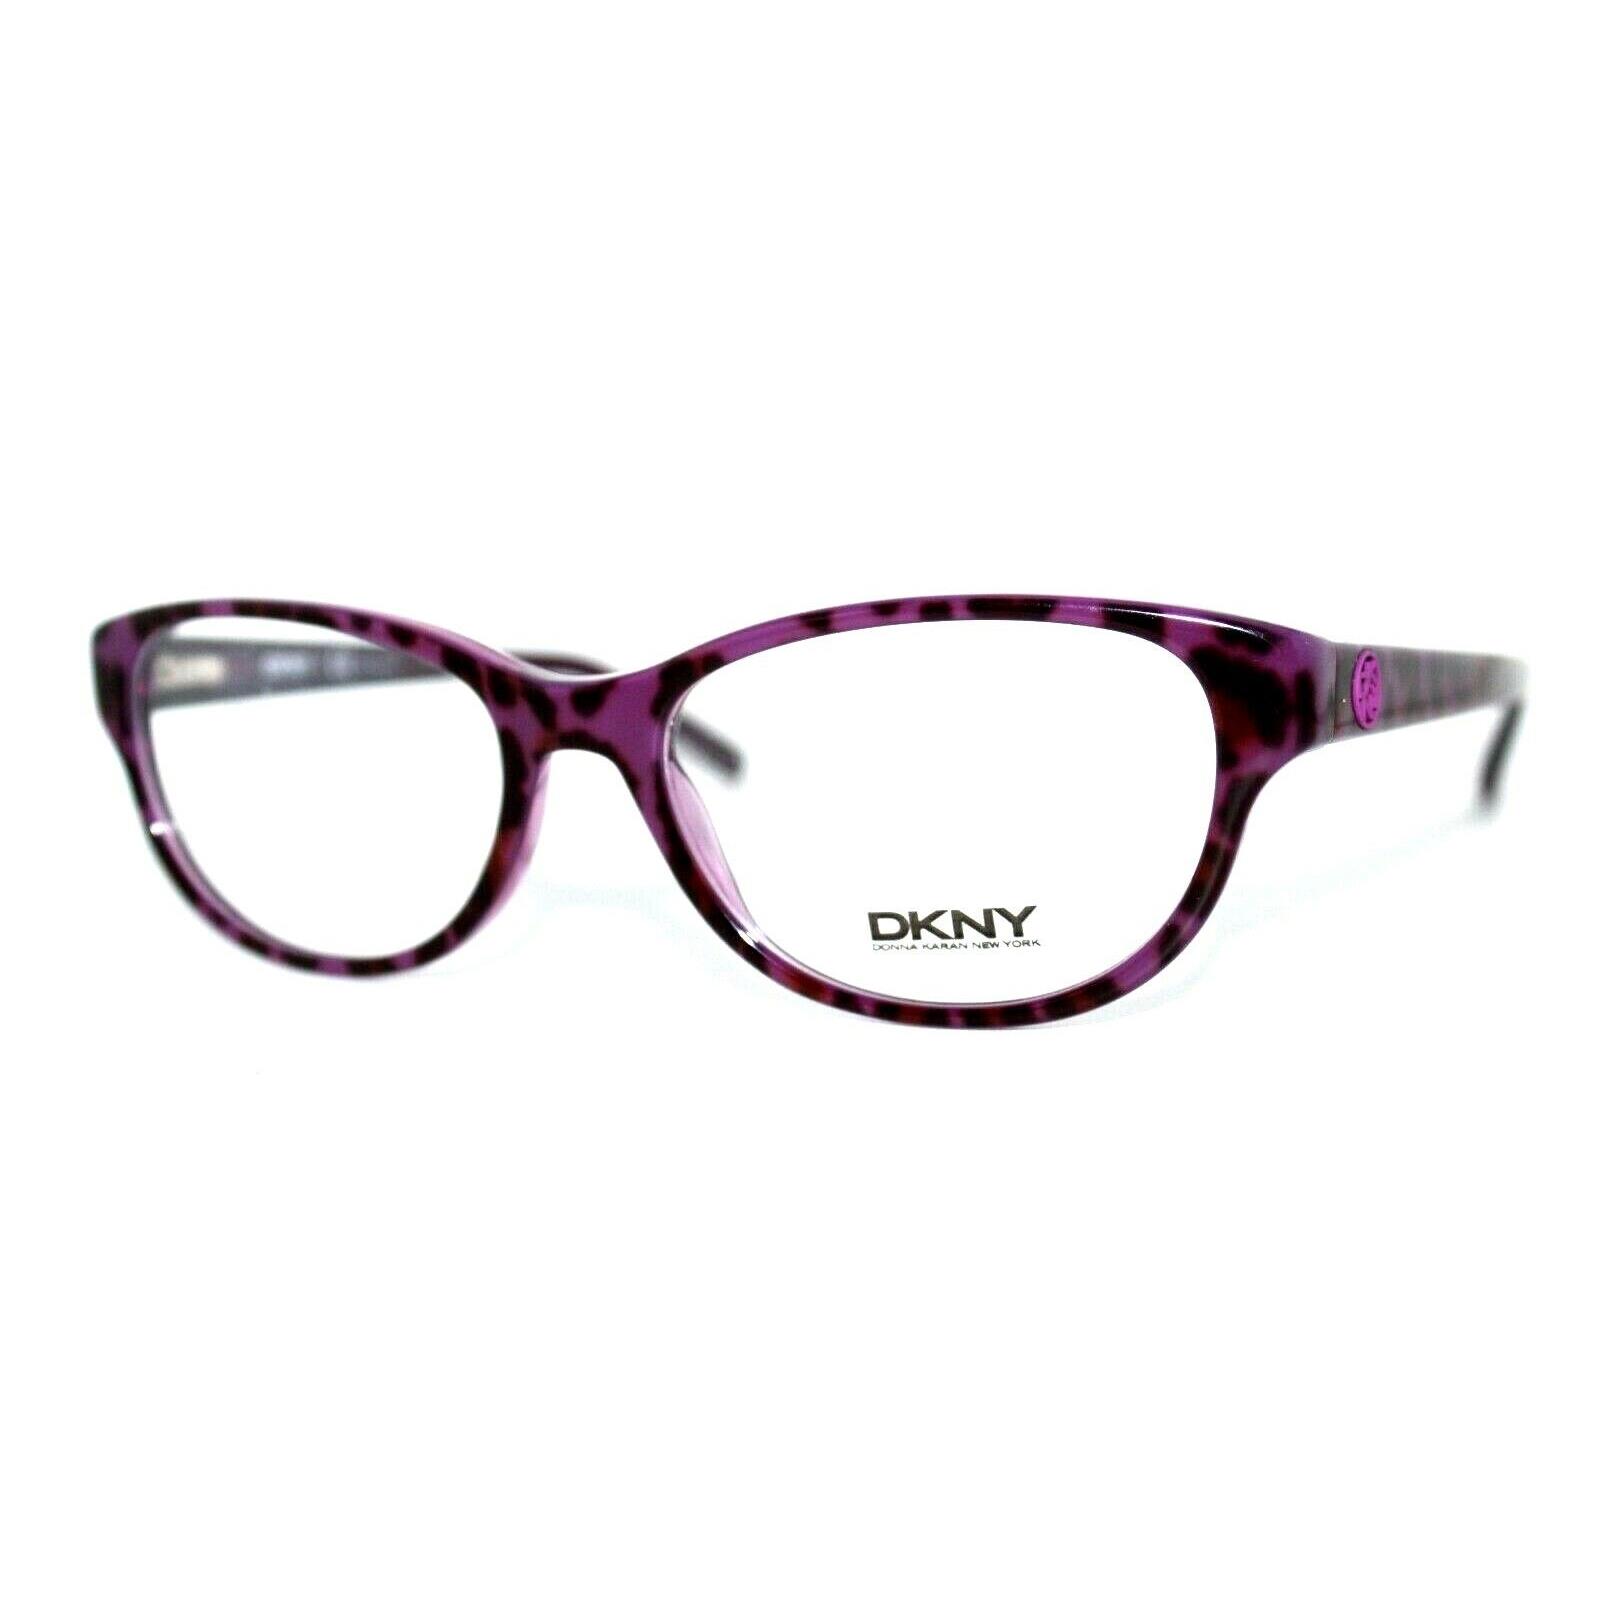 Dkny DY 4642 3616 Purple Eyeglasses Donna Karan Frames 51MM RX